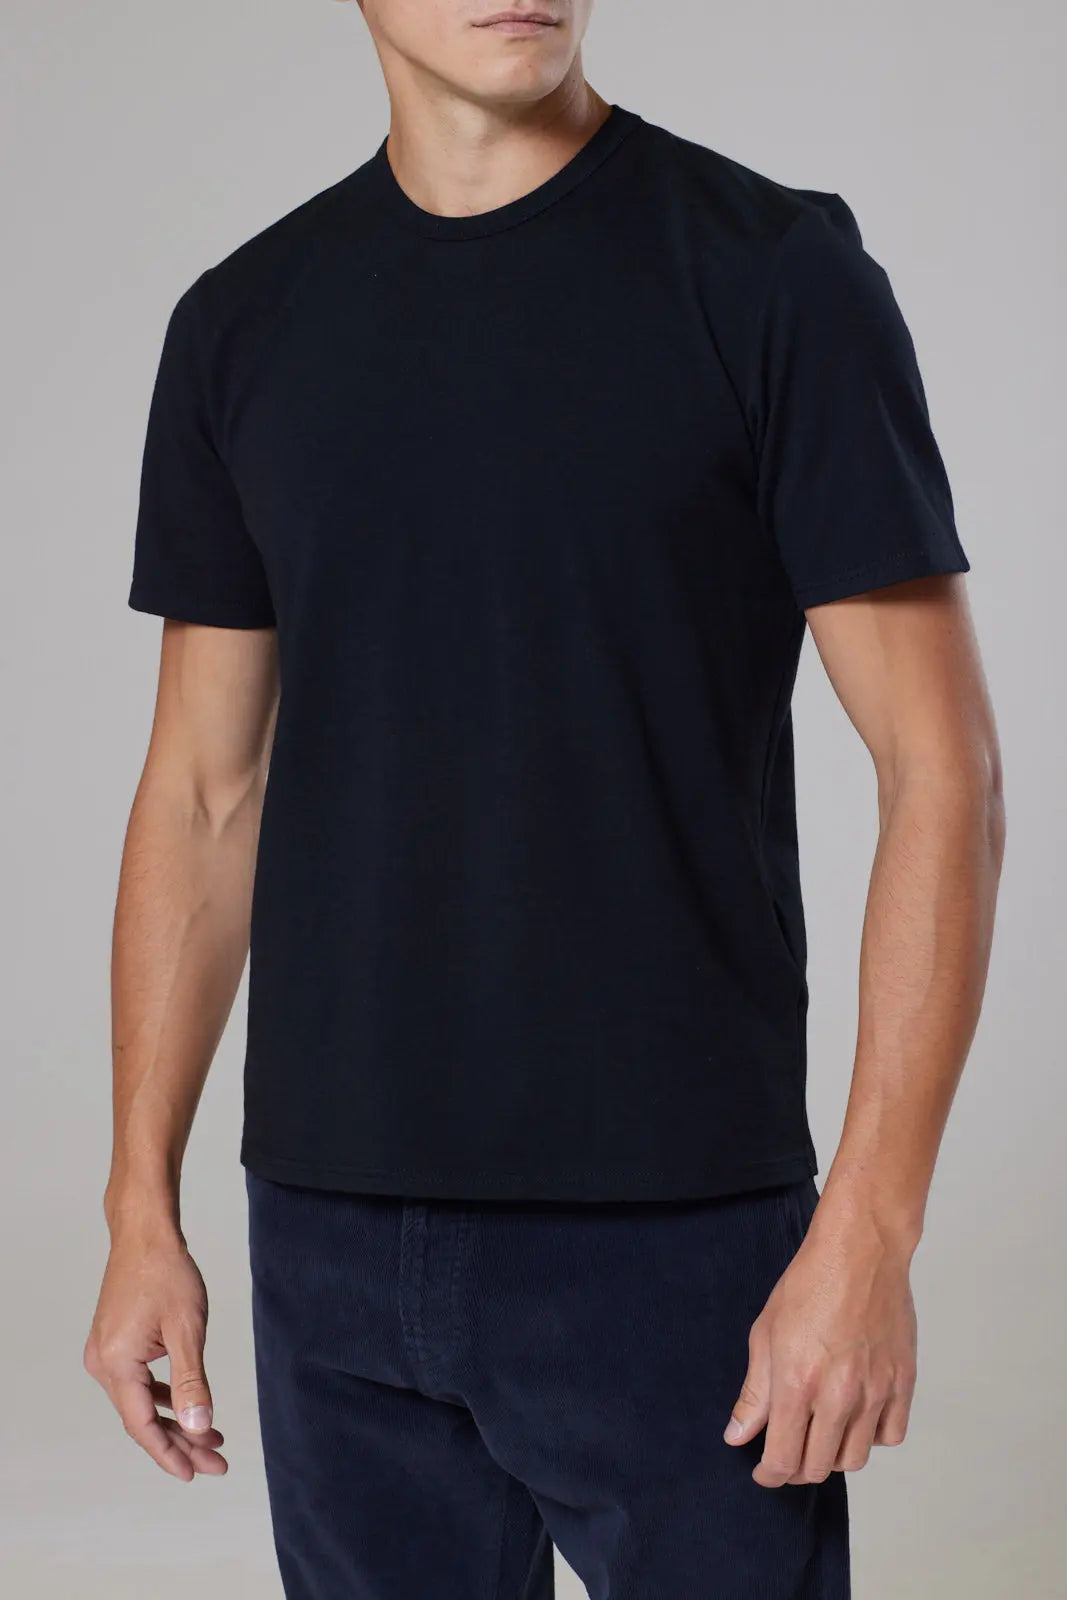 Trueman Short Sleeve Tee Shirt - Black Wear London